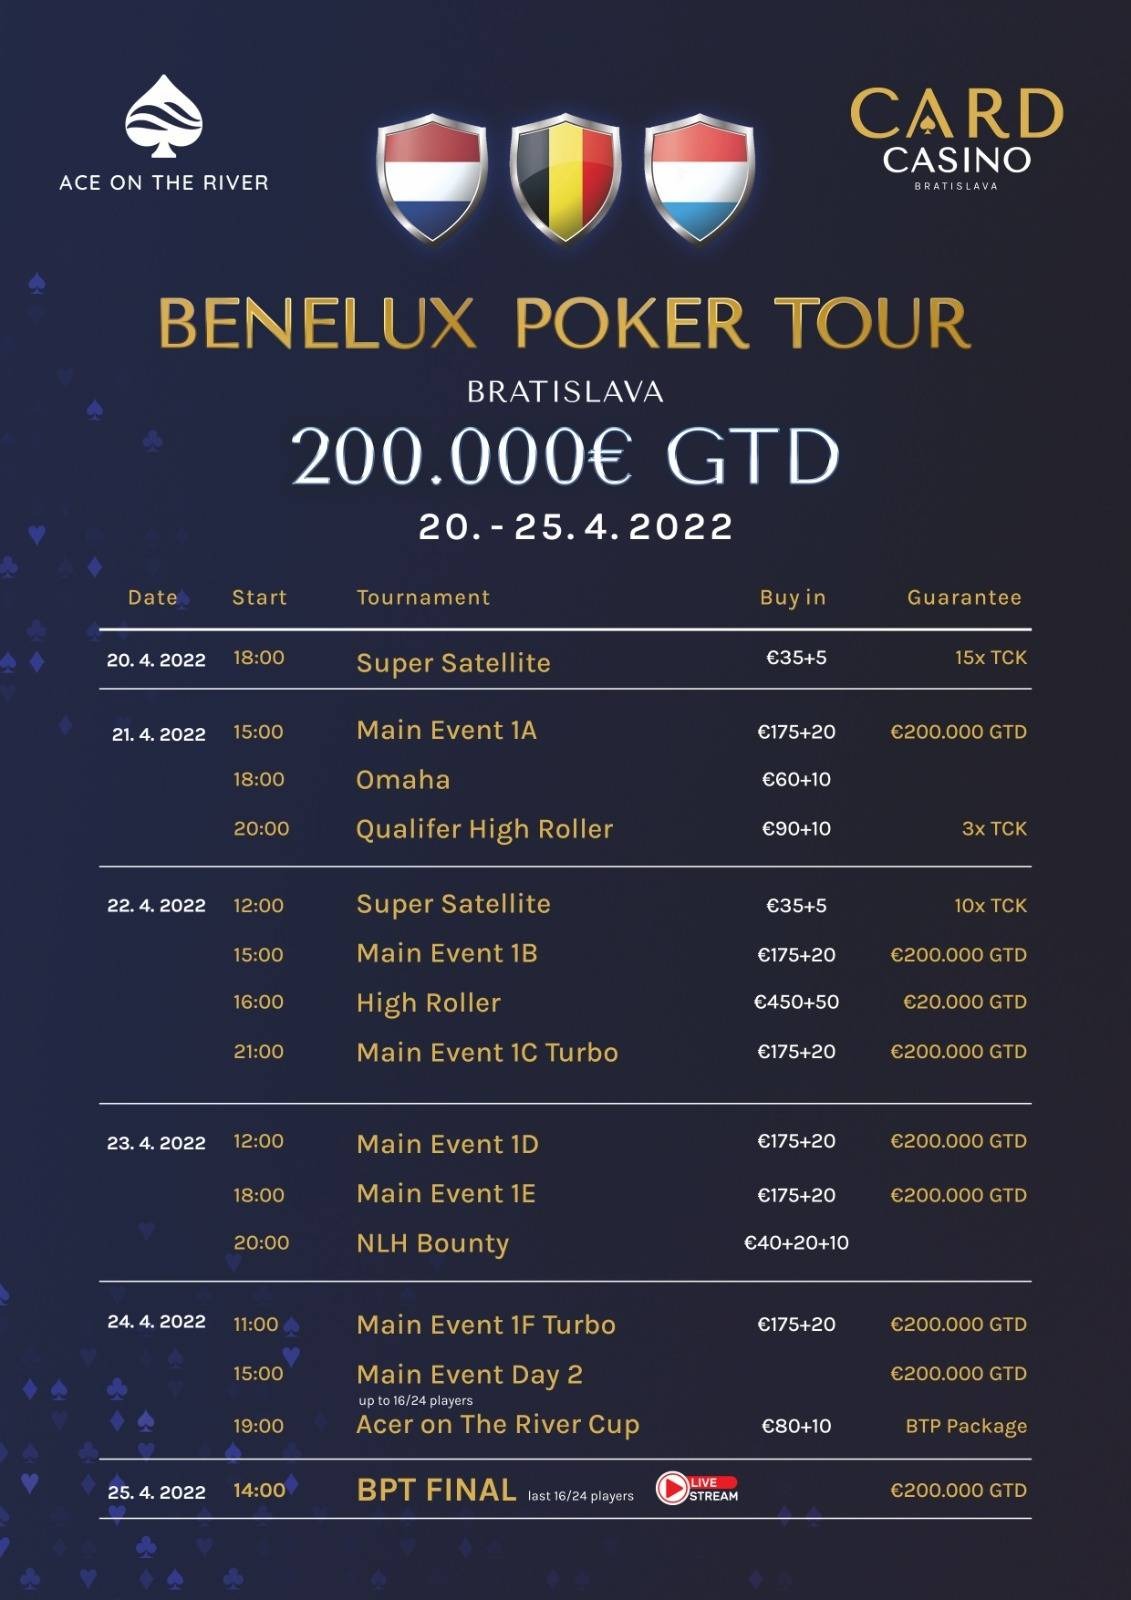 Benelux Poker Tour - Bratislav, 20-25 april 2022